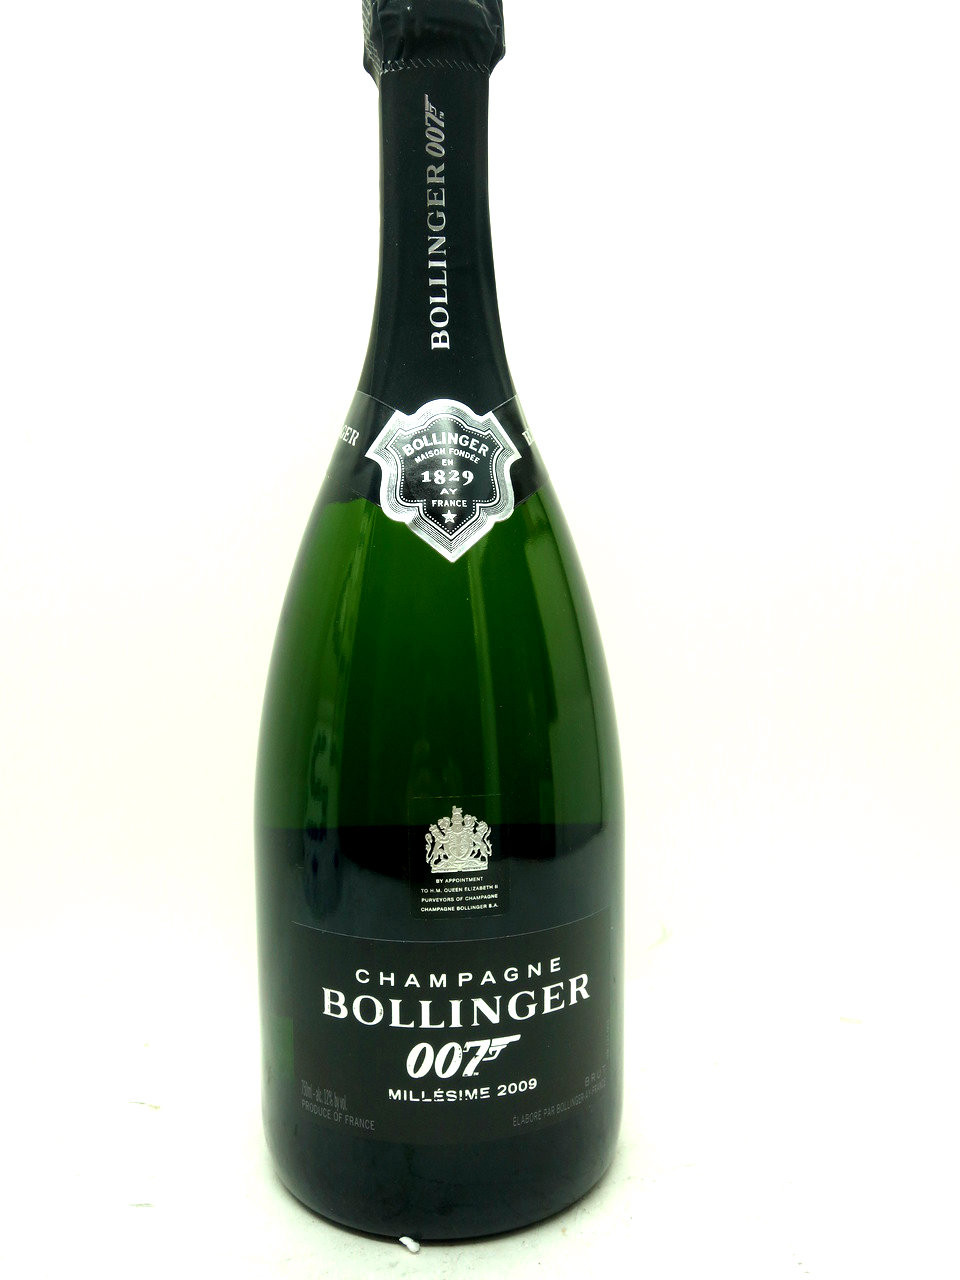 Limited Edition Belvedere 007 SPECTRE Bottle